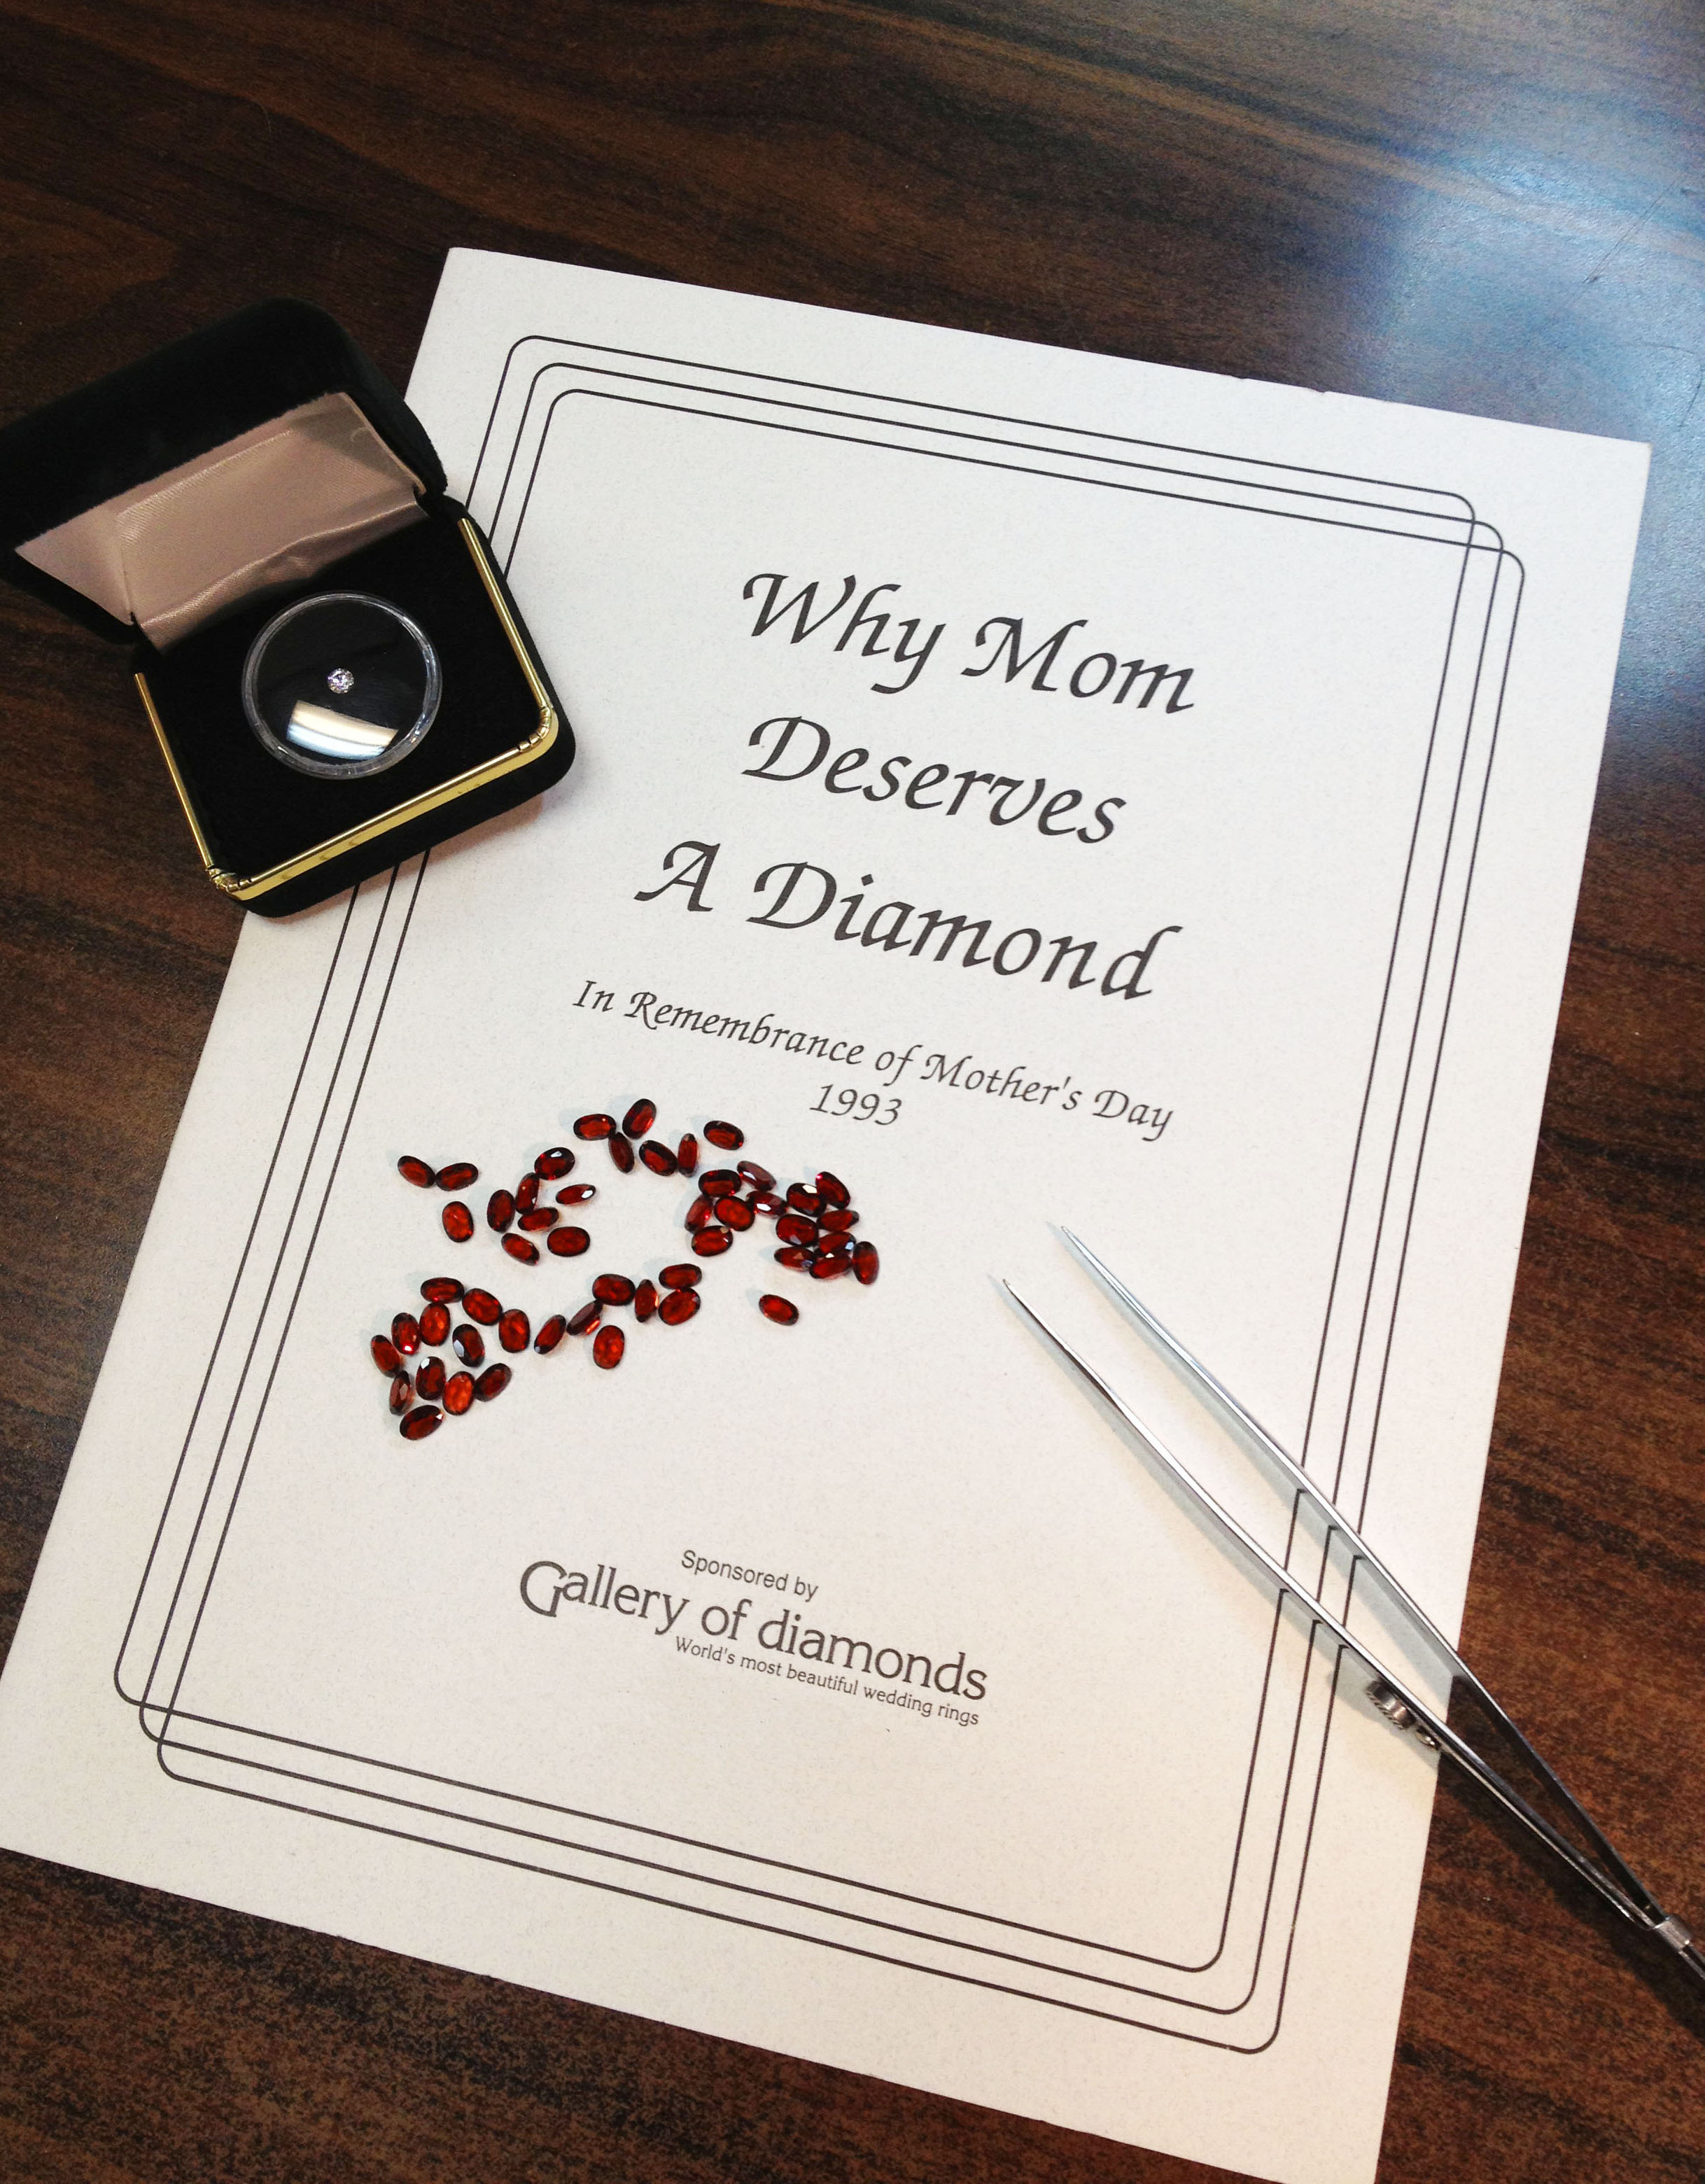 gems, essays, book, diamond mike, Gallery of diamonds, newport beach, 92660, why mom deserves a diamond